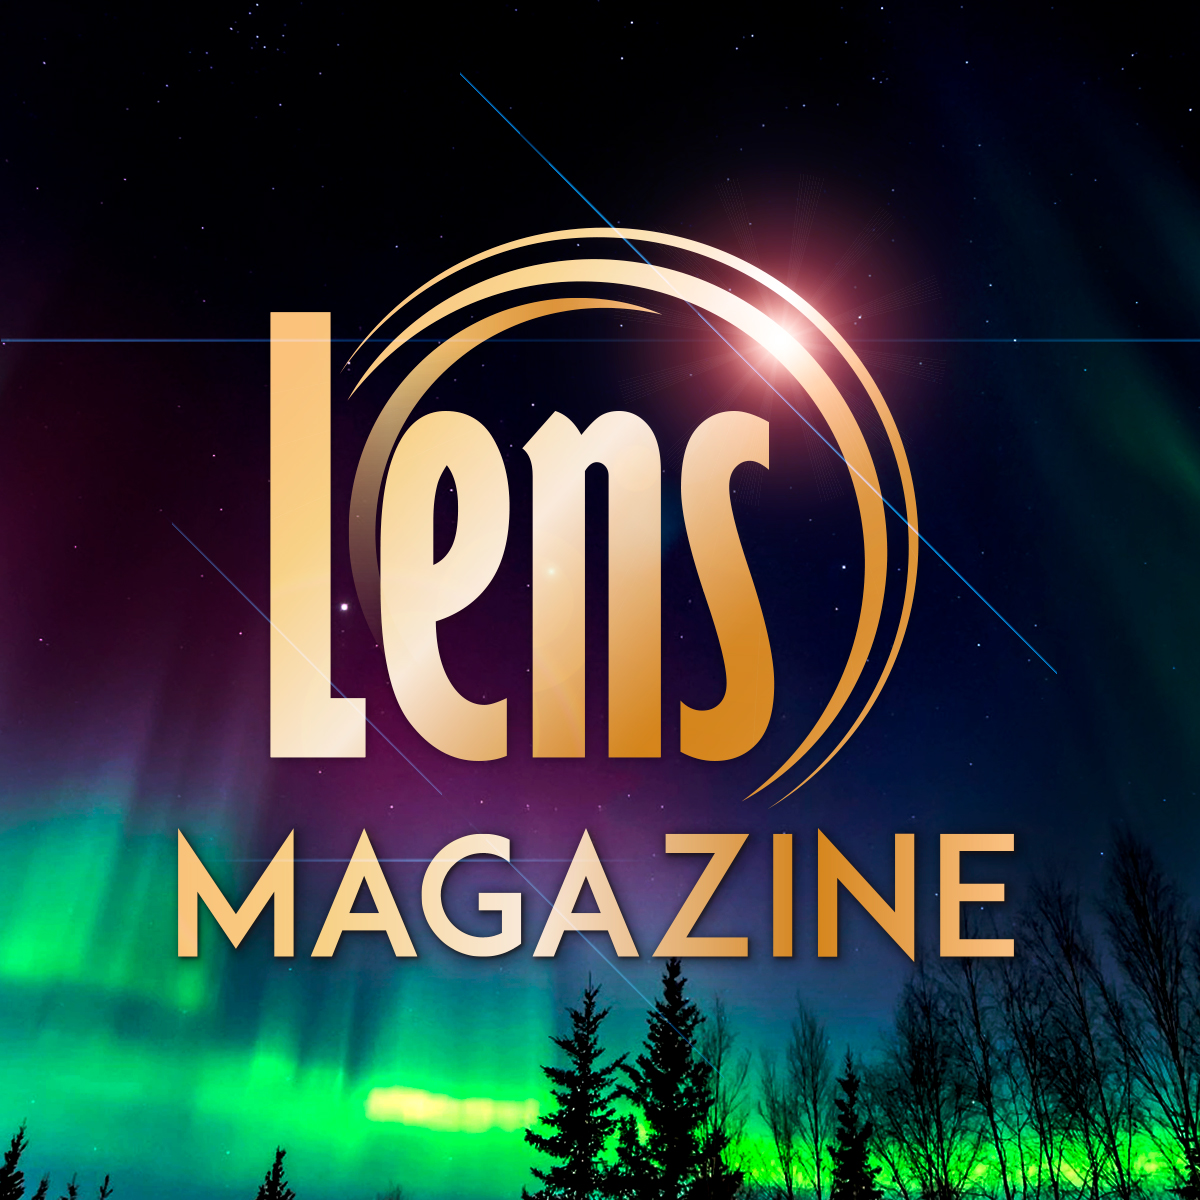 lens_magazine